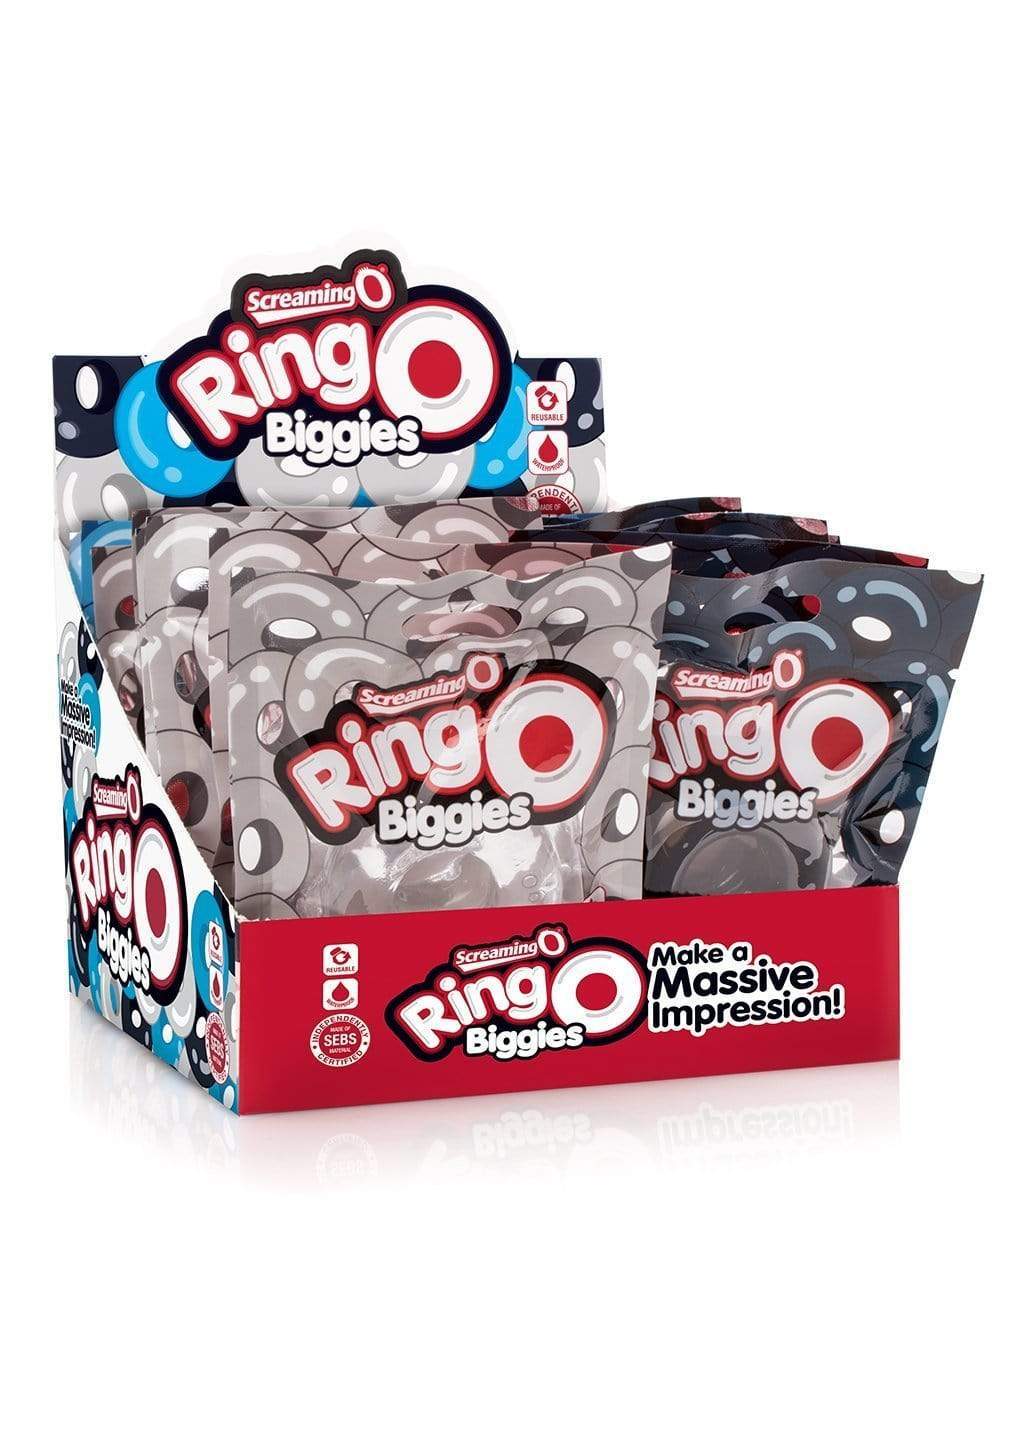 ringo biggies 18 count p o p box display assorted